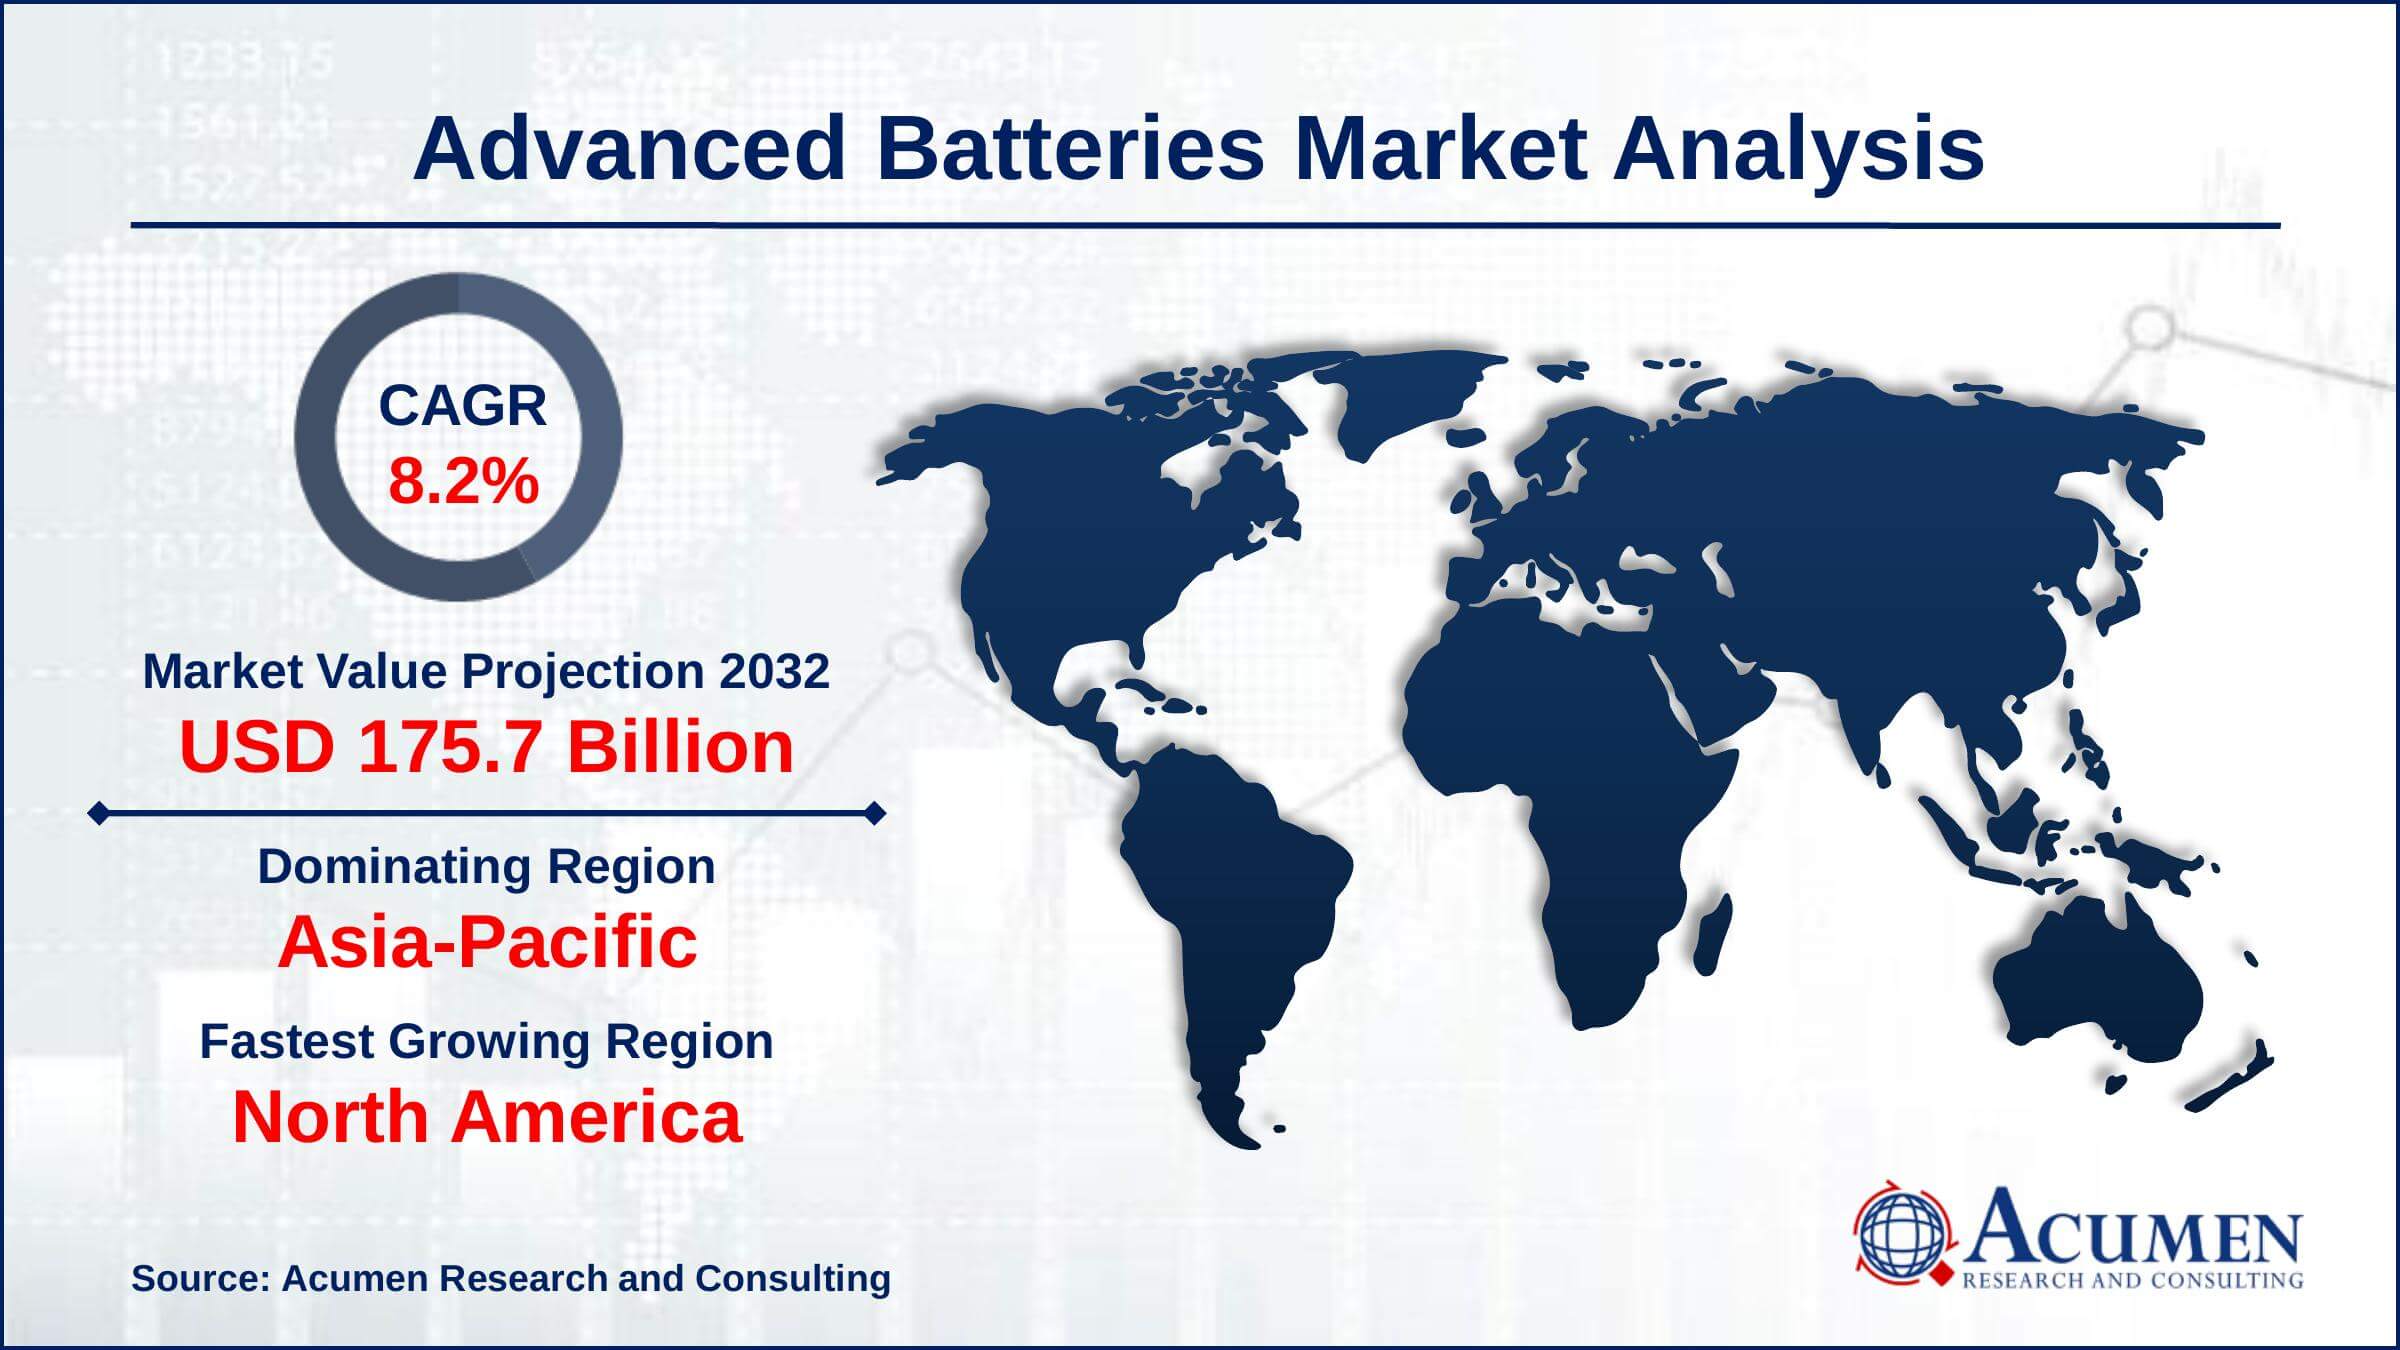 Global Advanced Batteries Market Trends